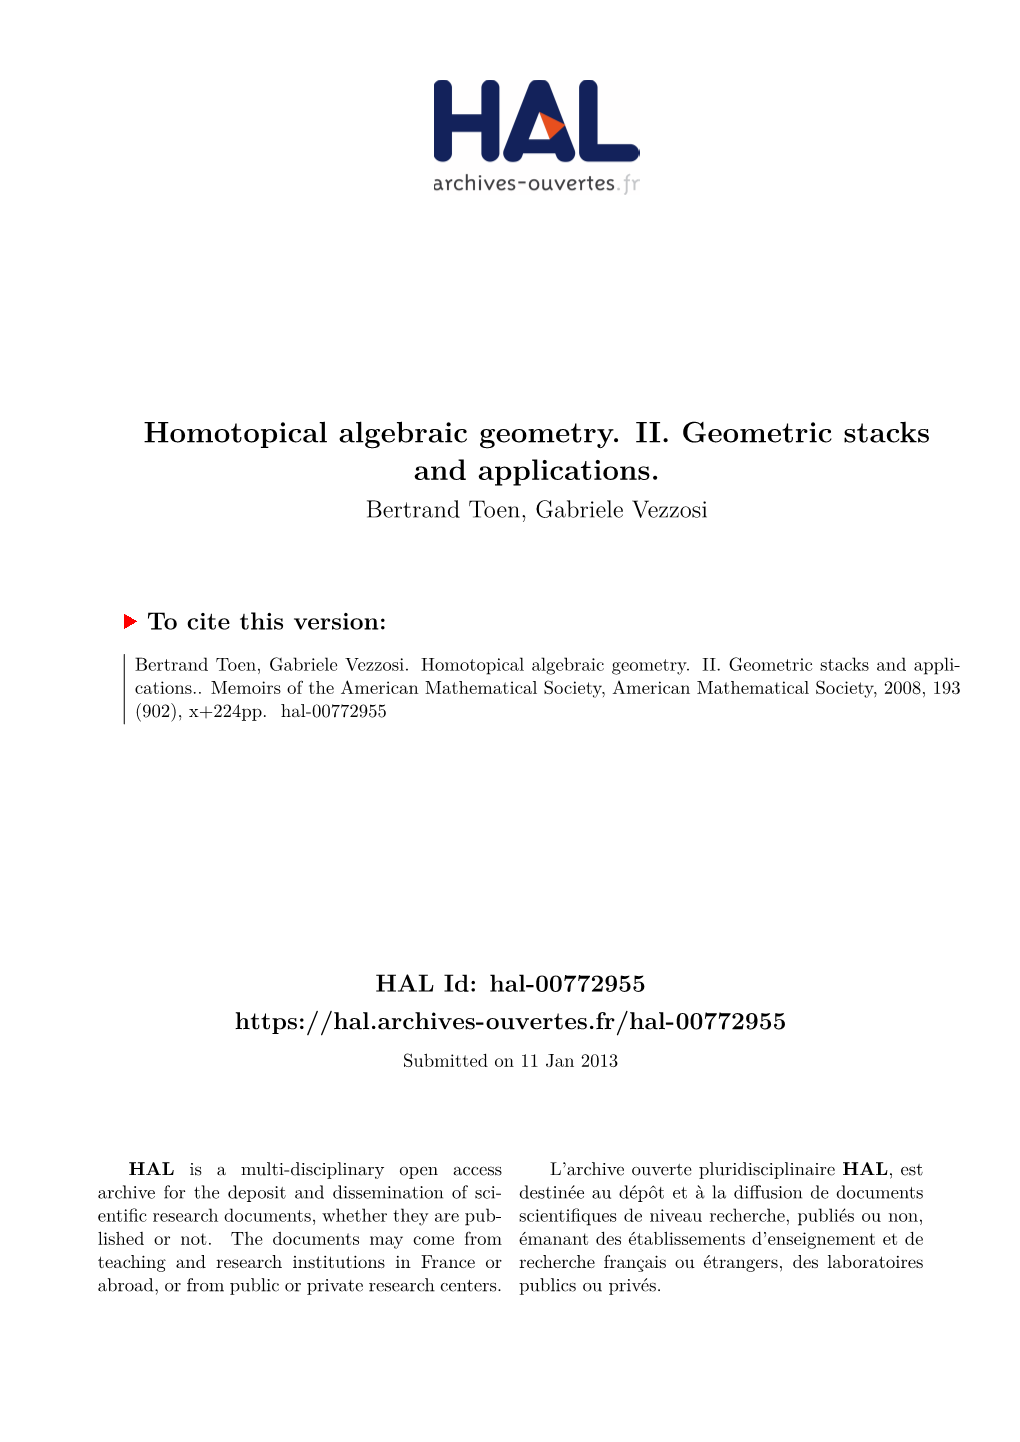 Homotopical Algebraic Geometry. II. Geometric Stacks and Applications. Bertrand Toen, Gabriele Vezzosi